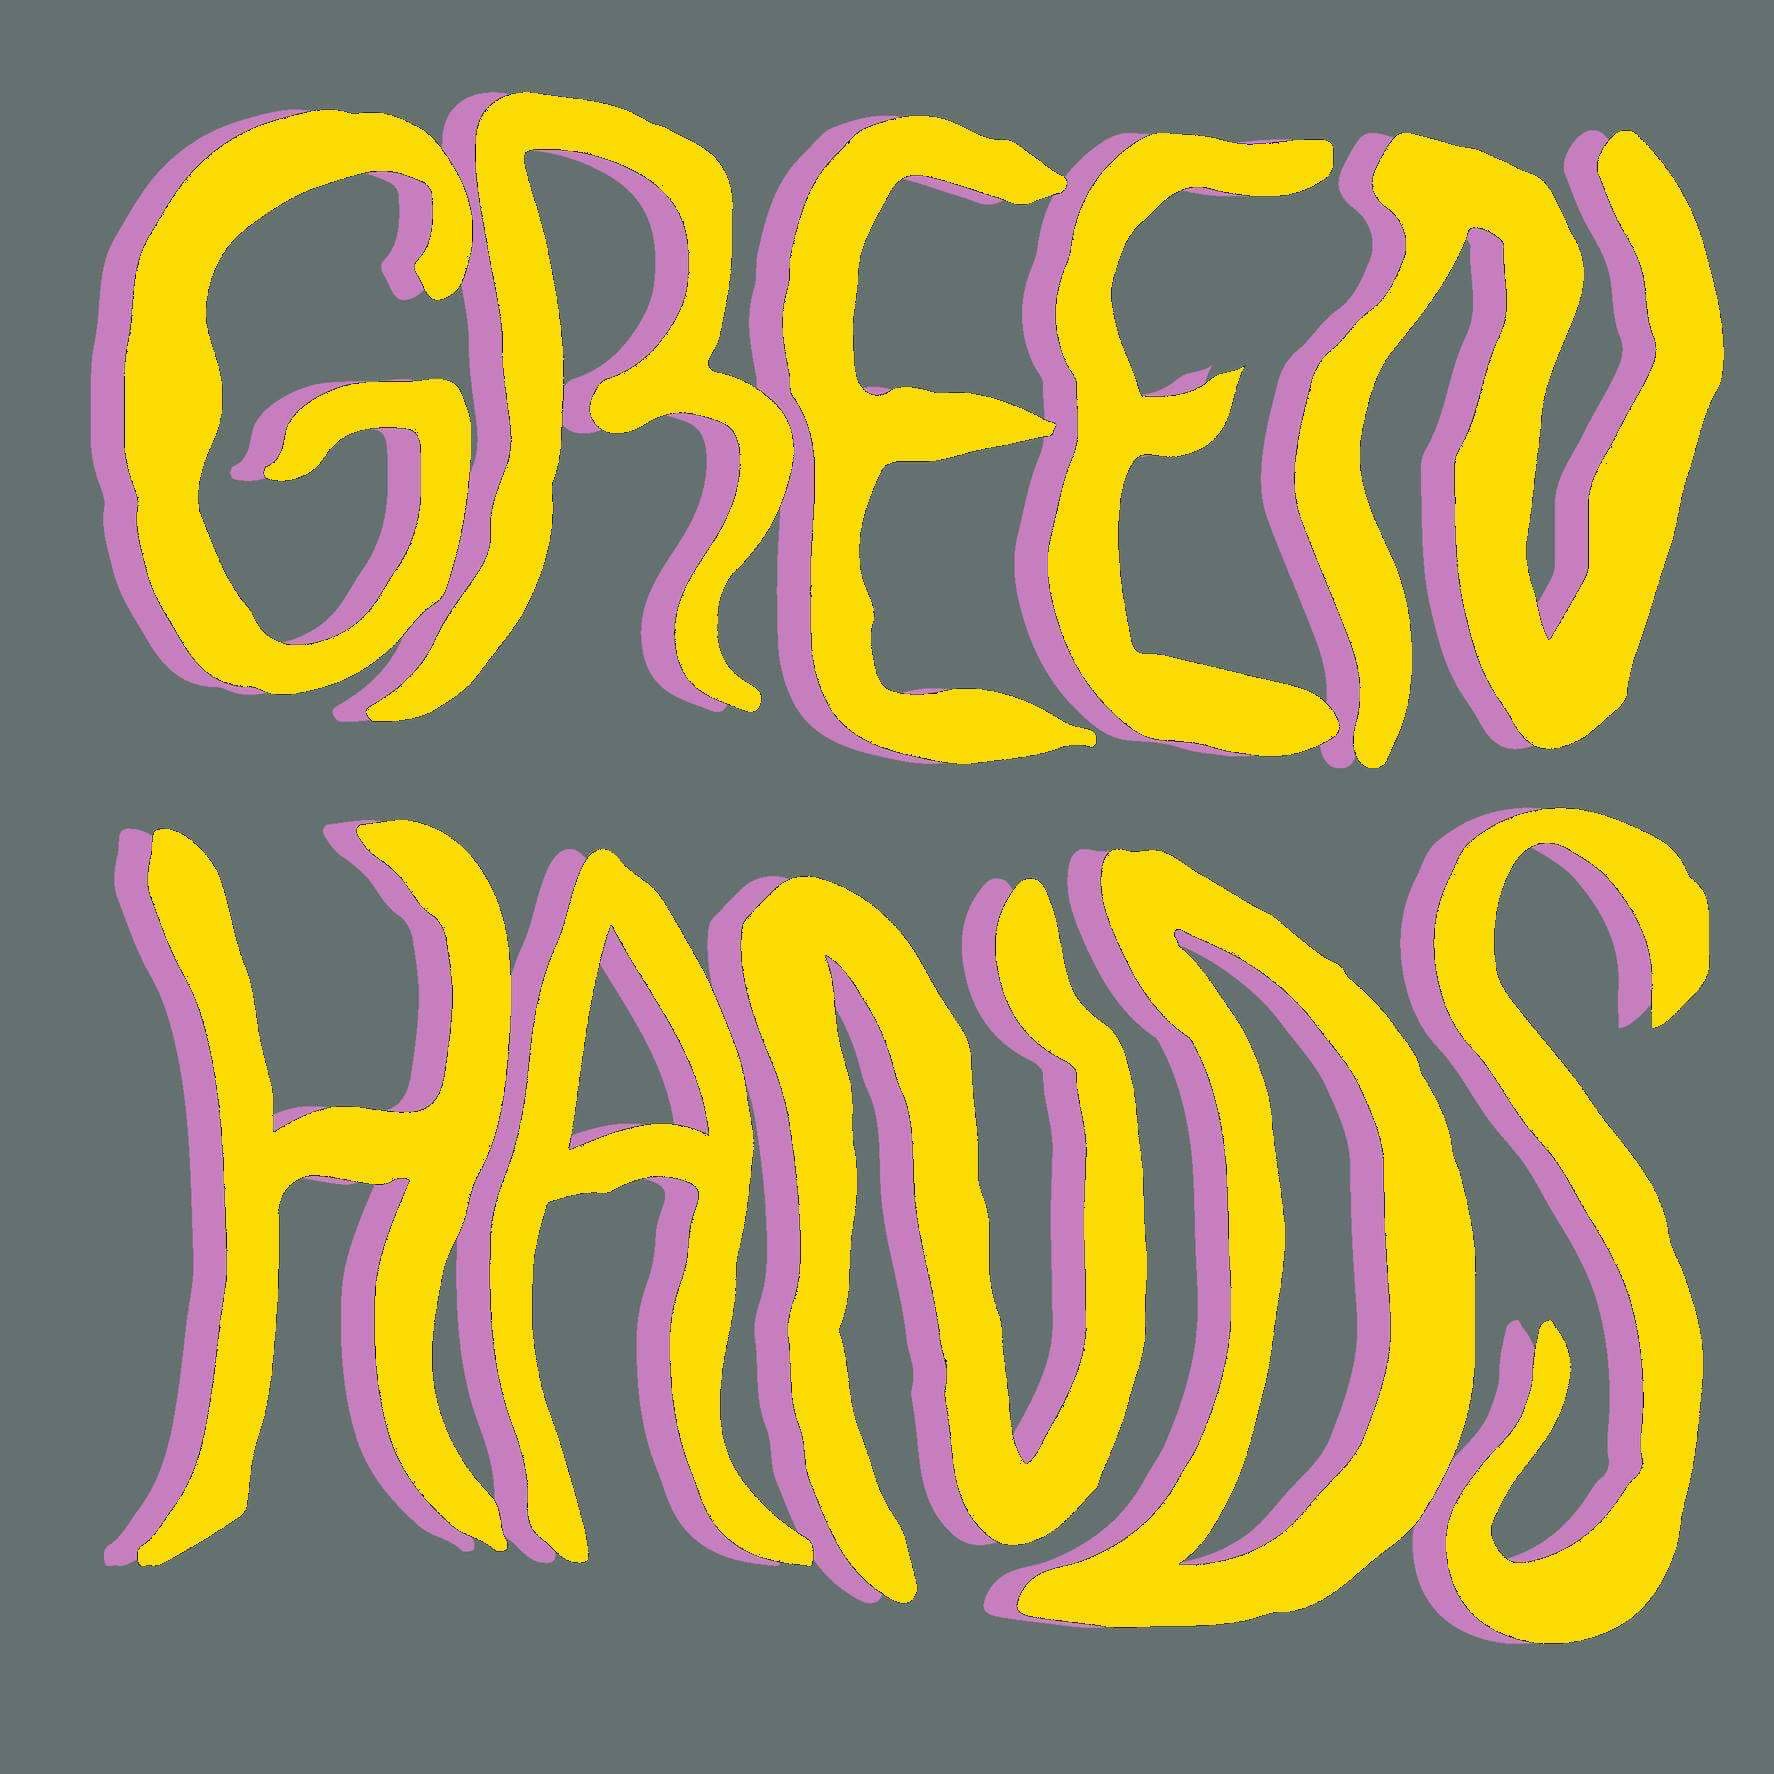 Green Hands Radio